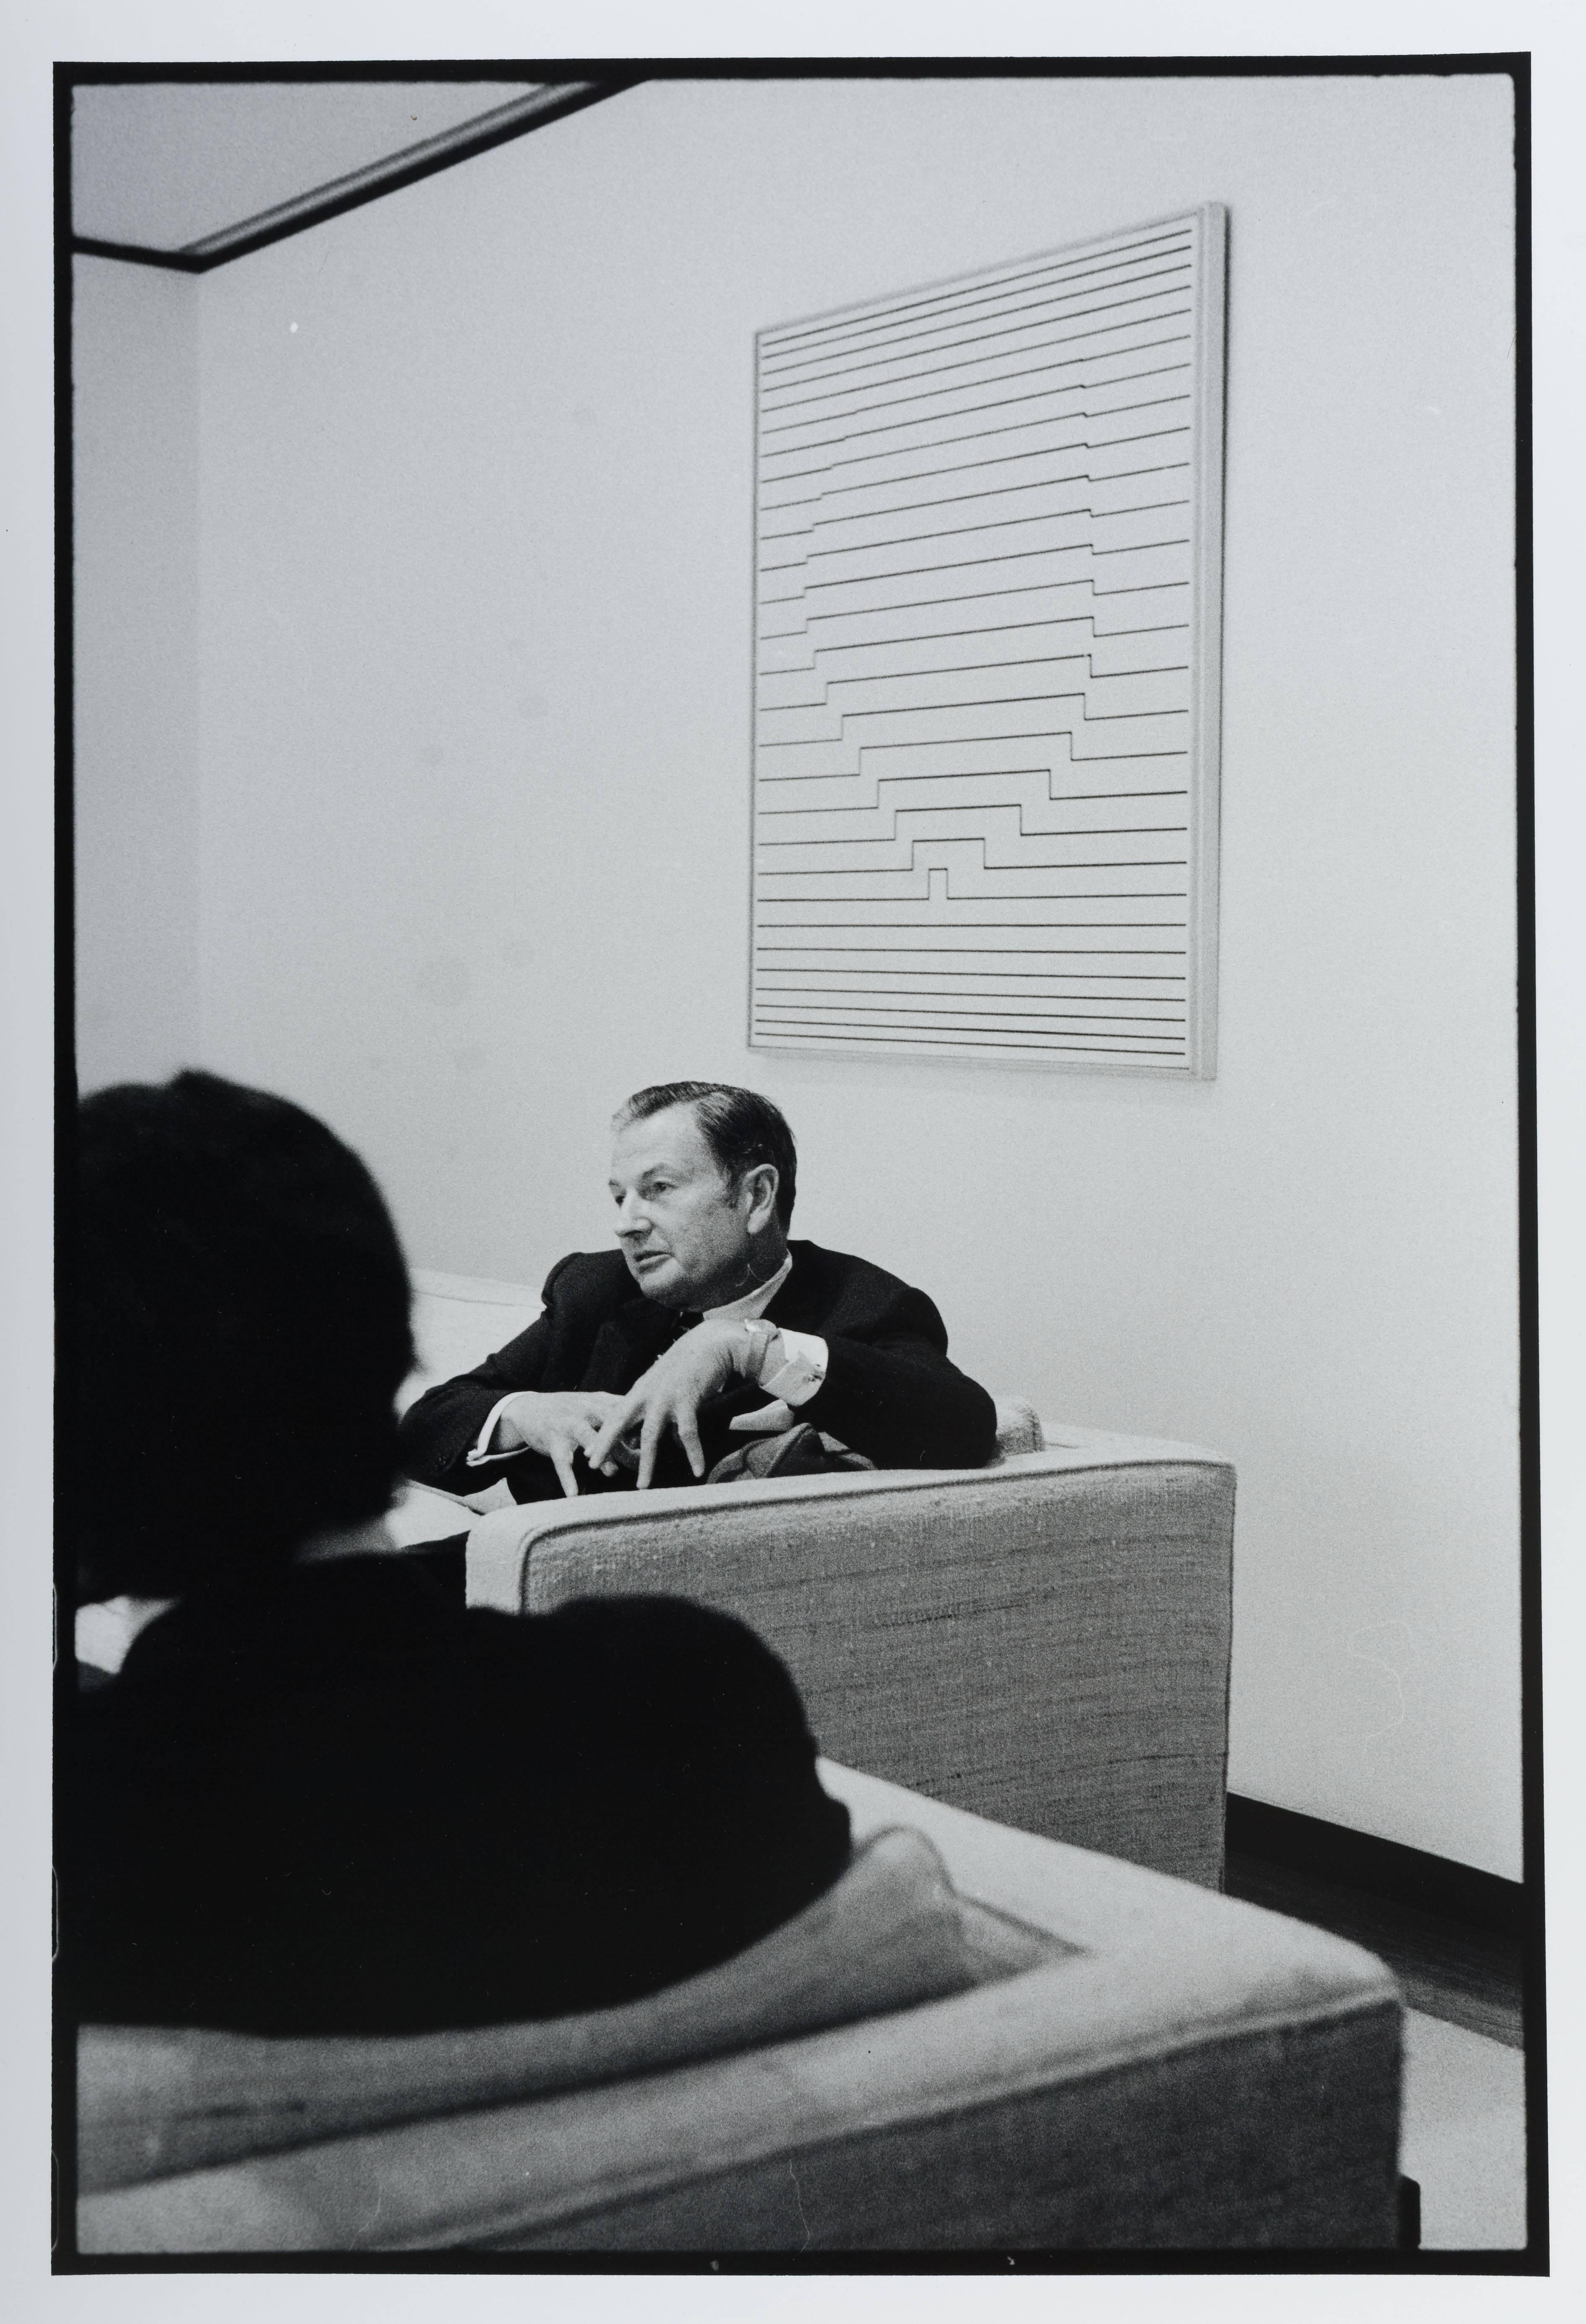 Leonard Freed Black and White Photograph – NYC David Rockefeller